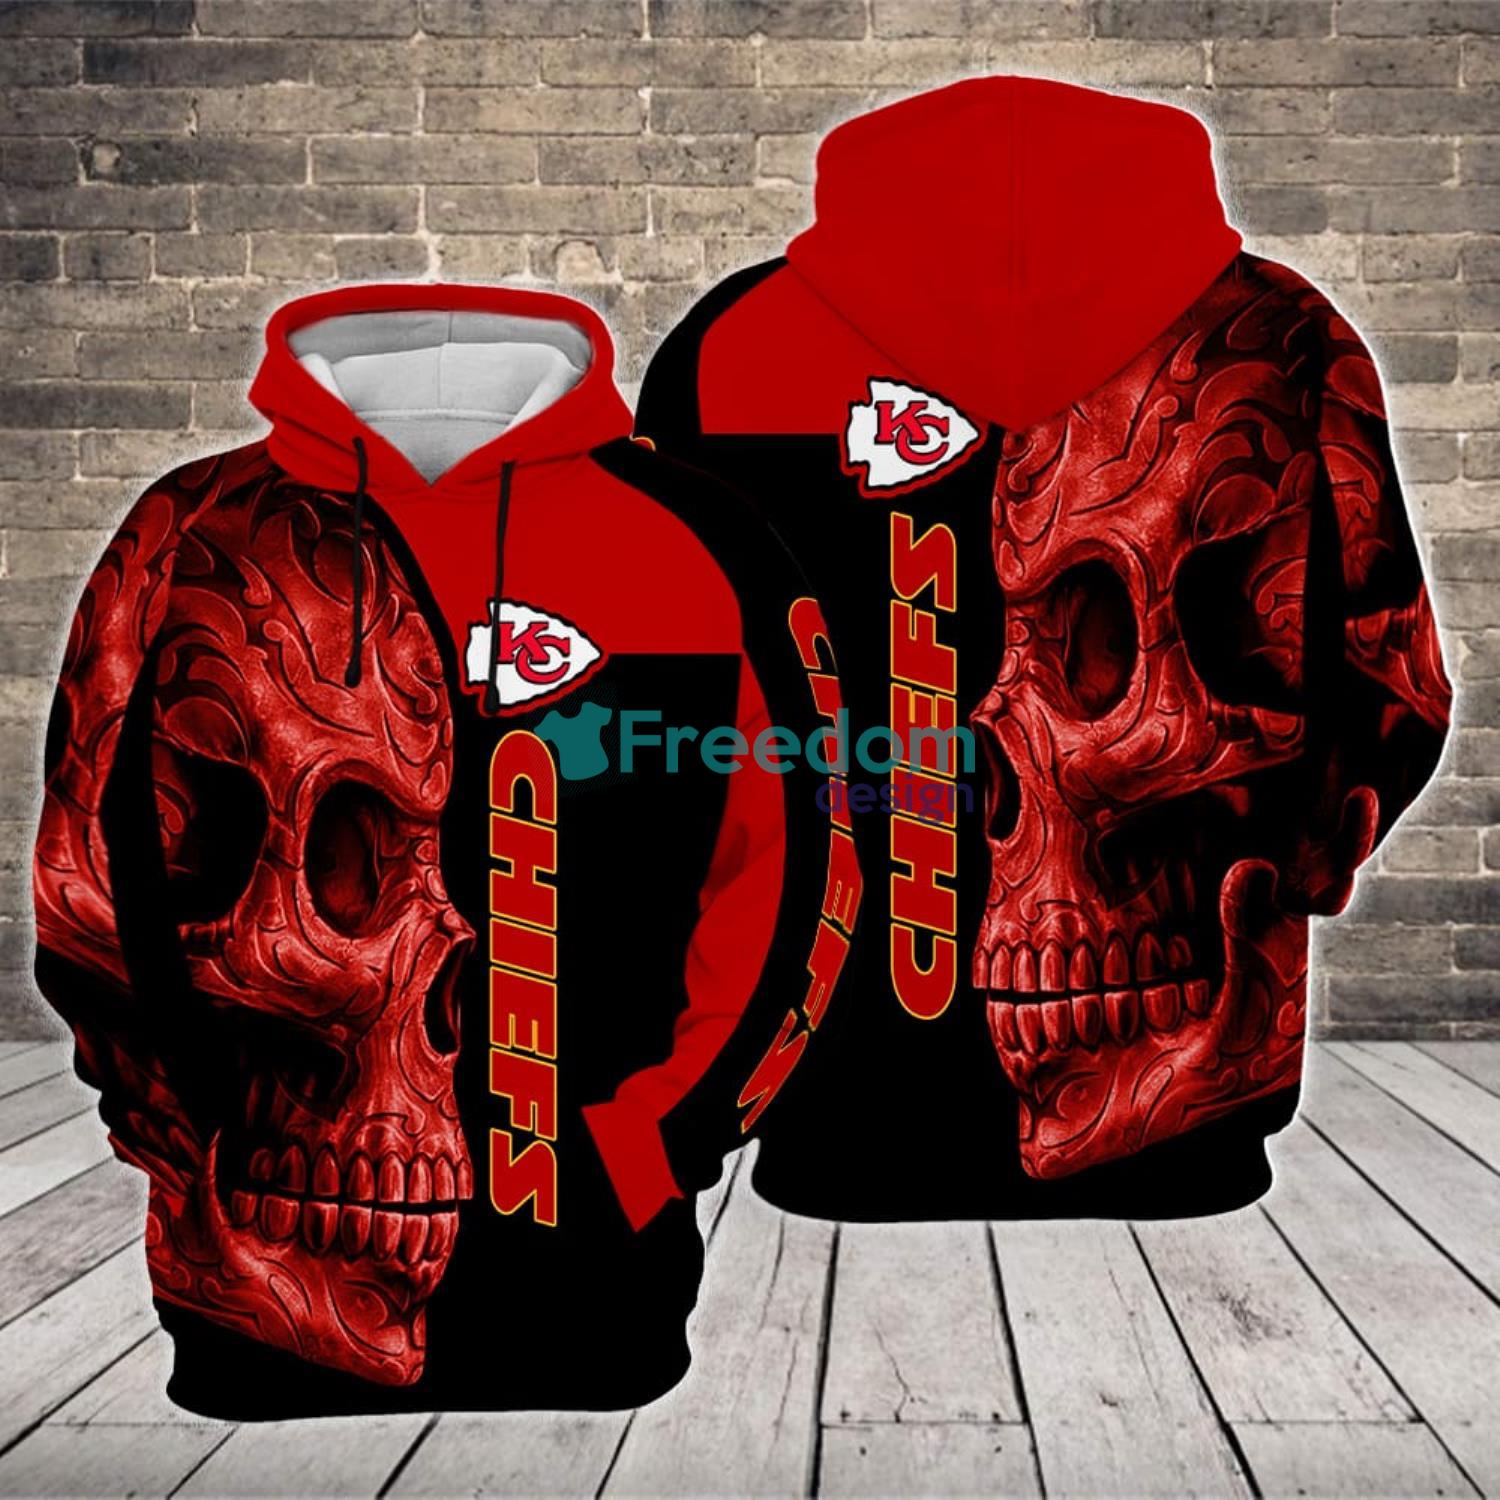 Kansas City Chiefs 3D Skull Sweatshirt, Kansas City Chiefs Sweatshirt NFL 